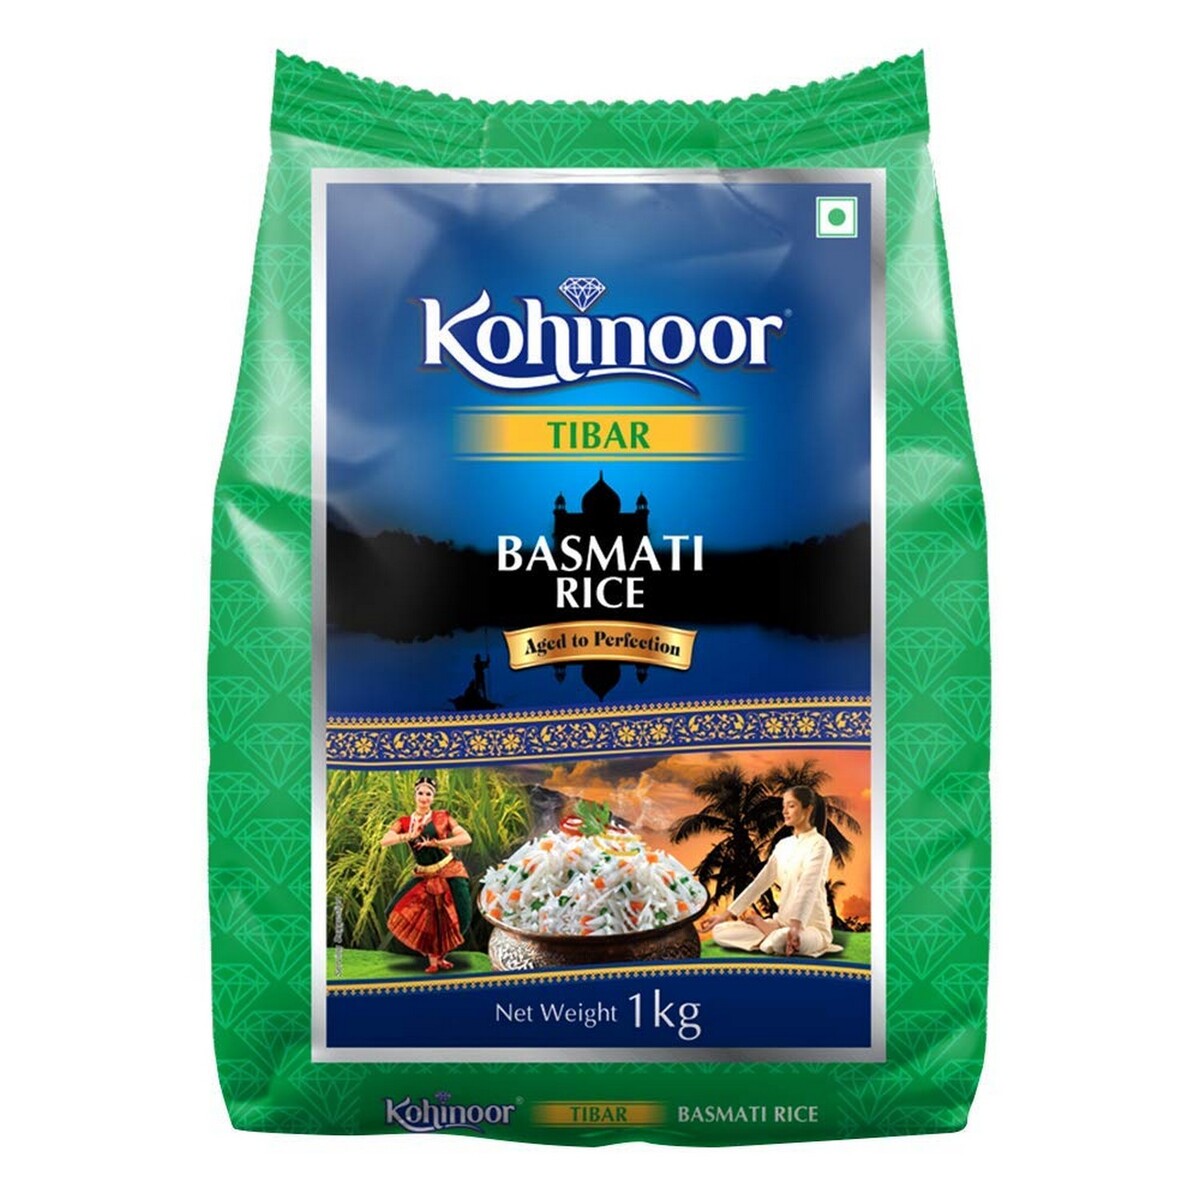 Kohinoor Tibar Rice 1kg